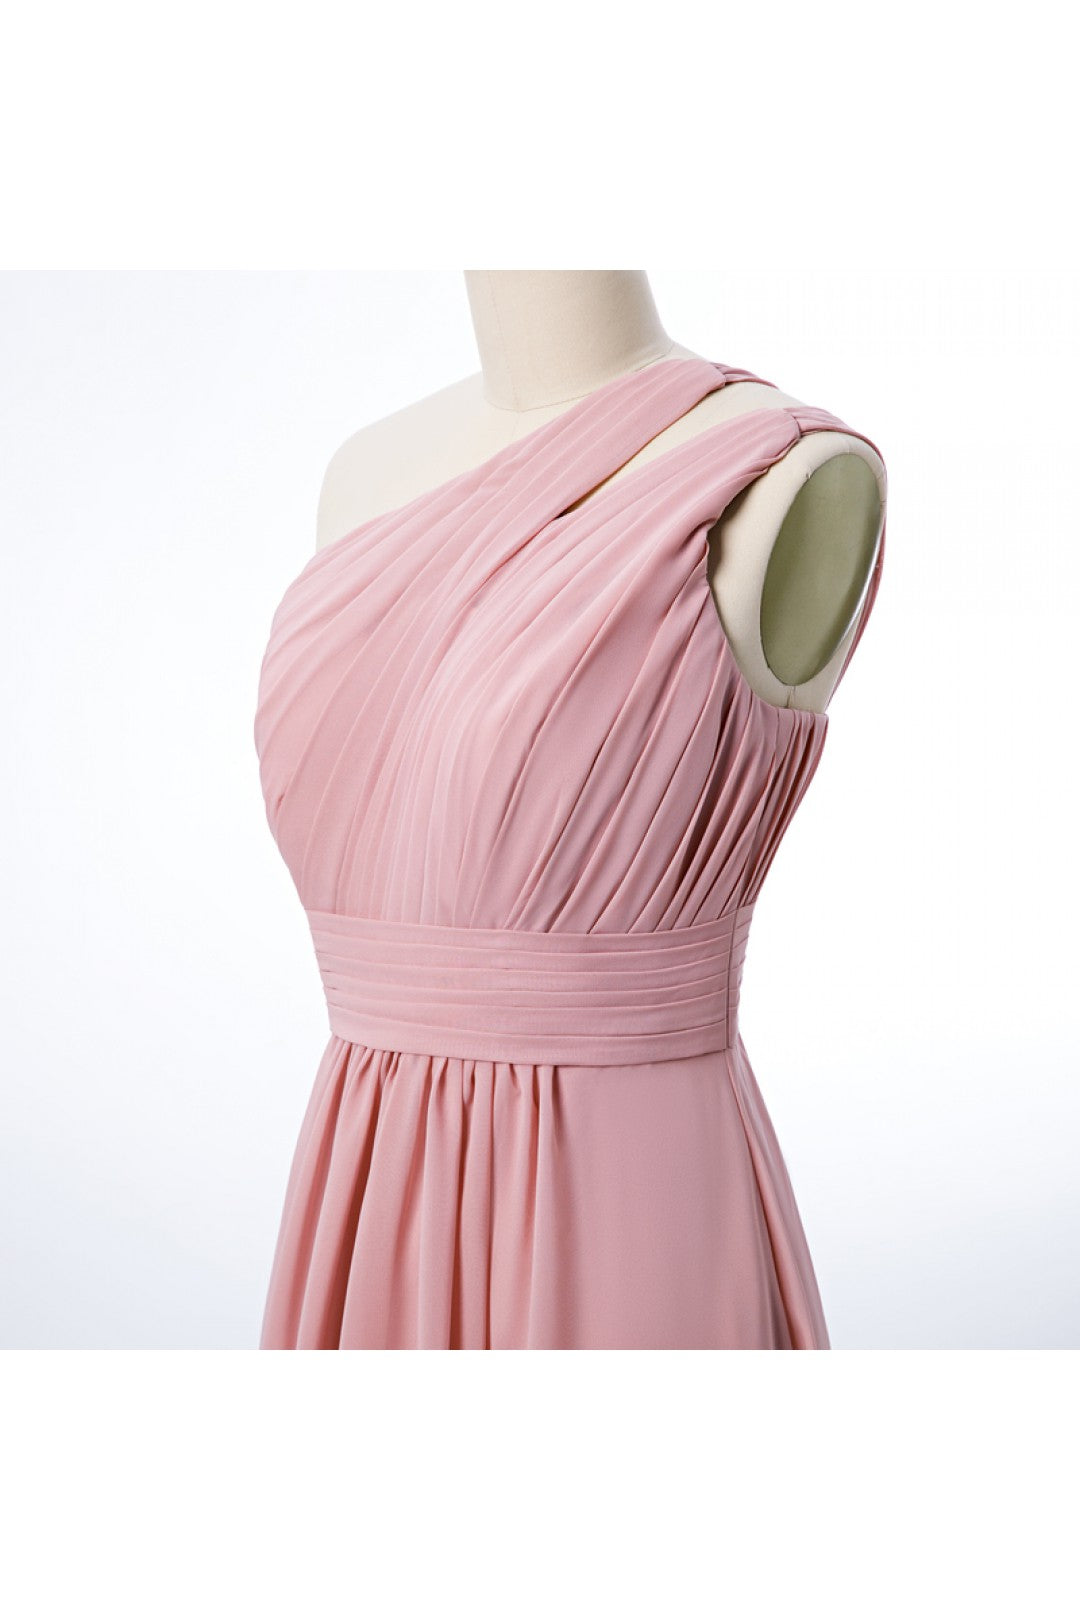 Bridesmaid Dresses Under 116, One Shoulder Blush Pink Chiffon A-line Bridesmaid Dress